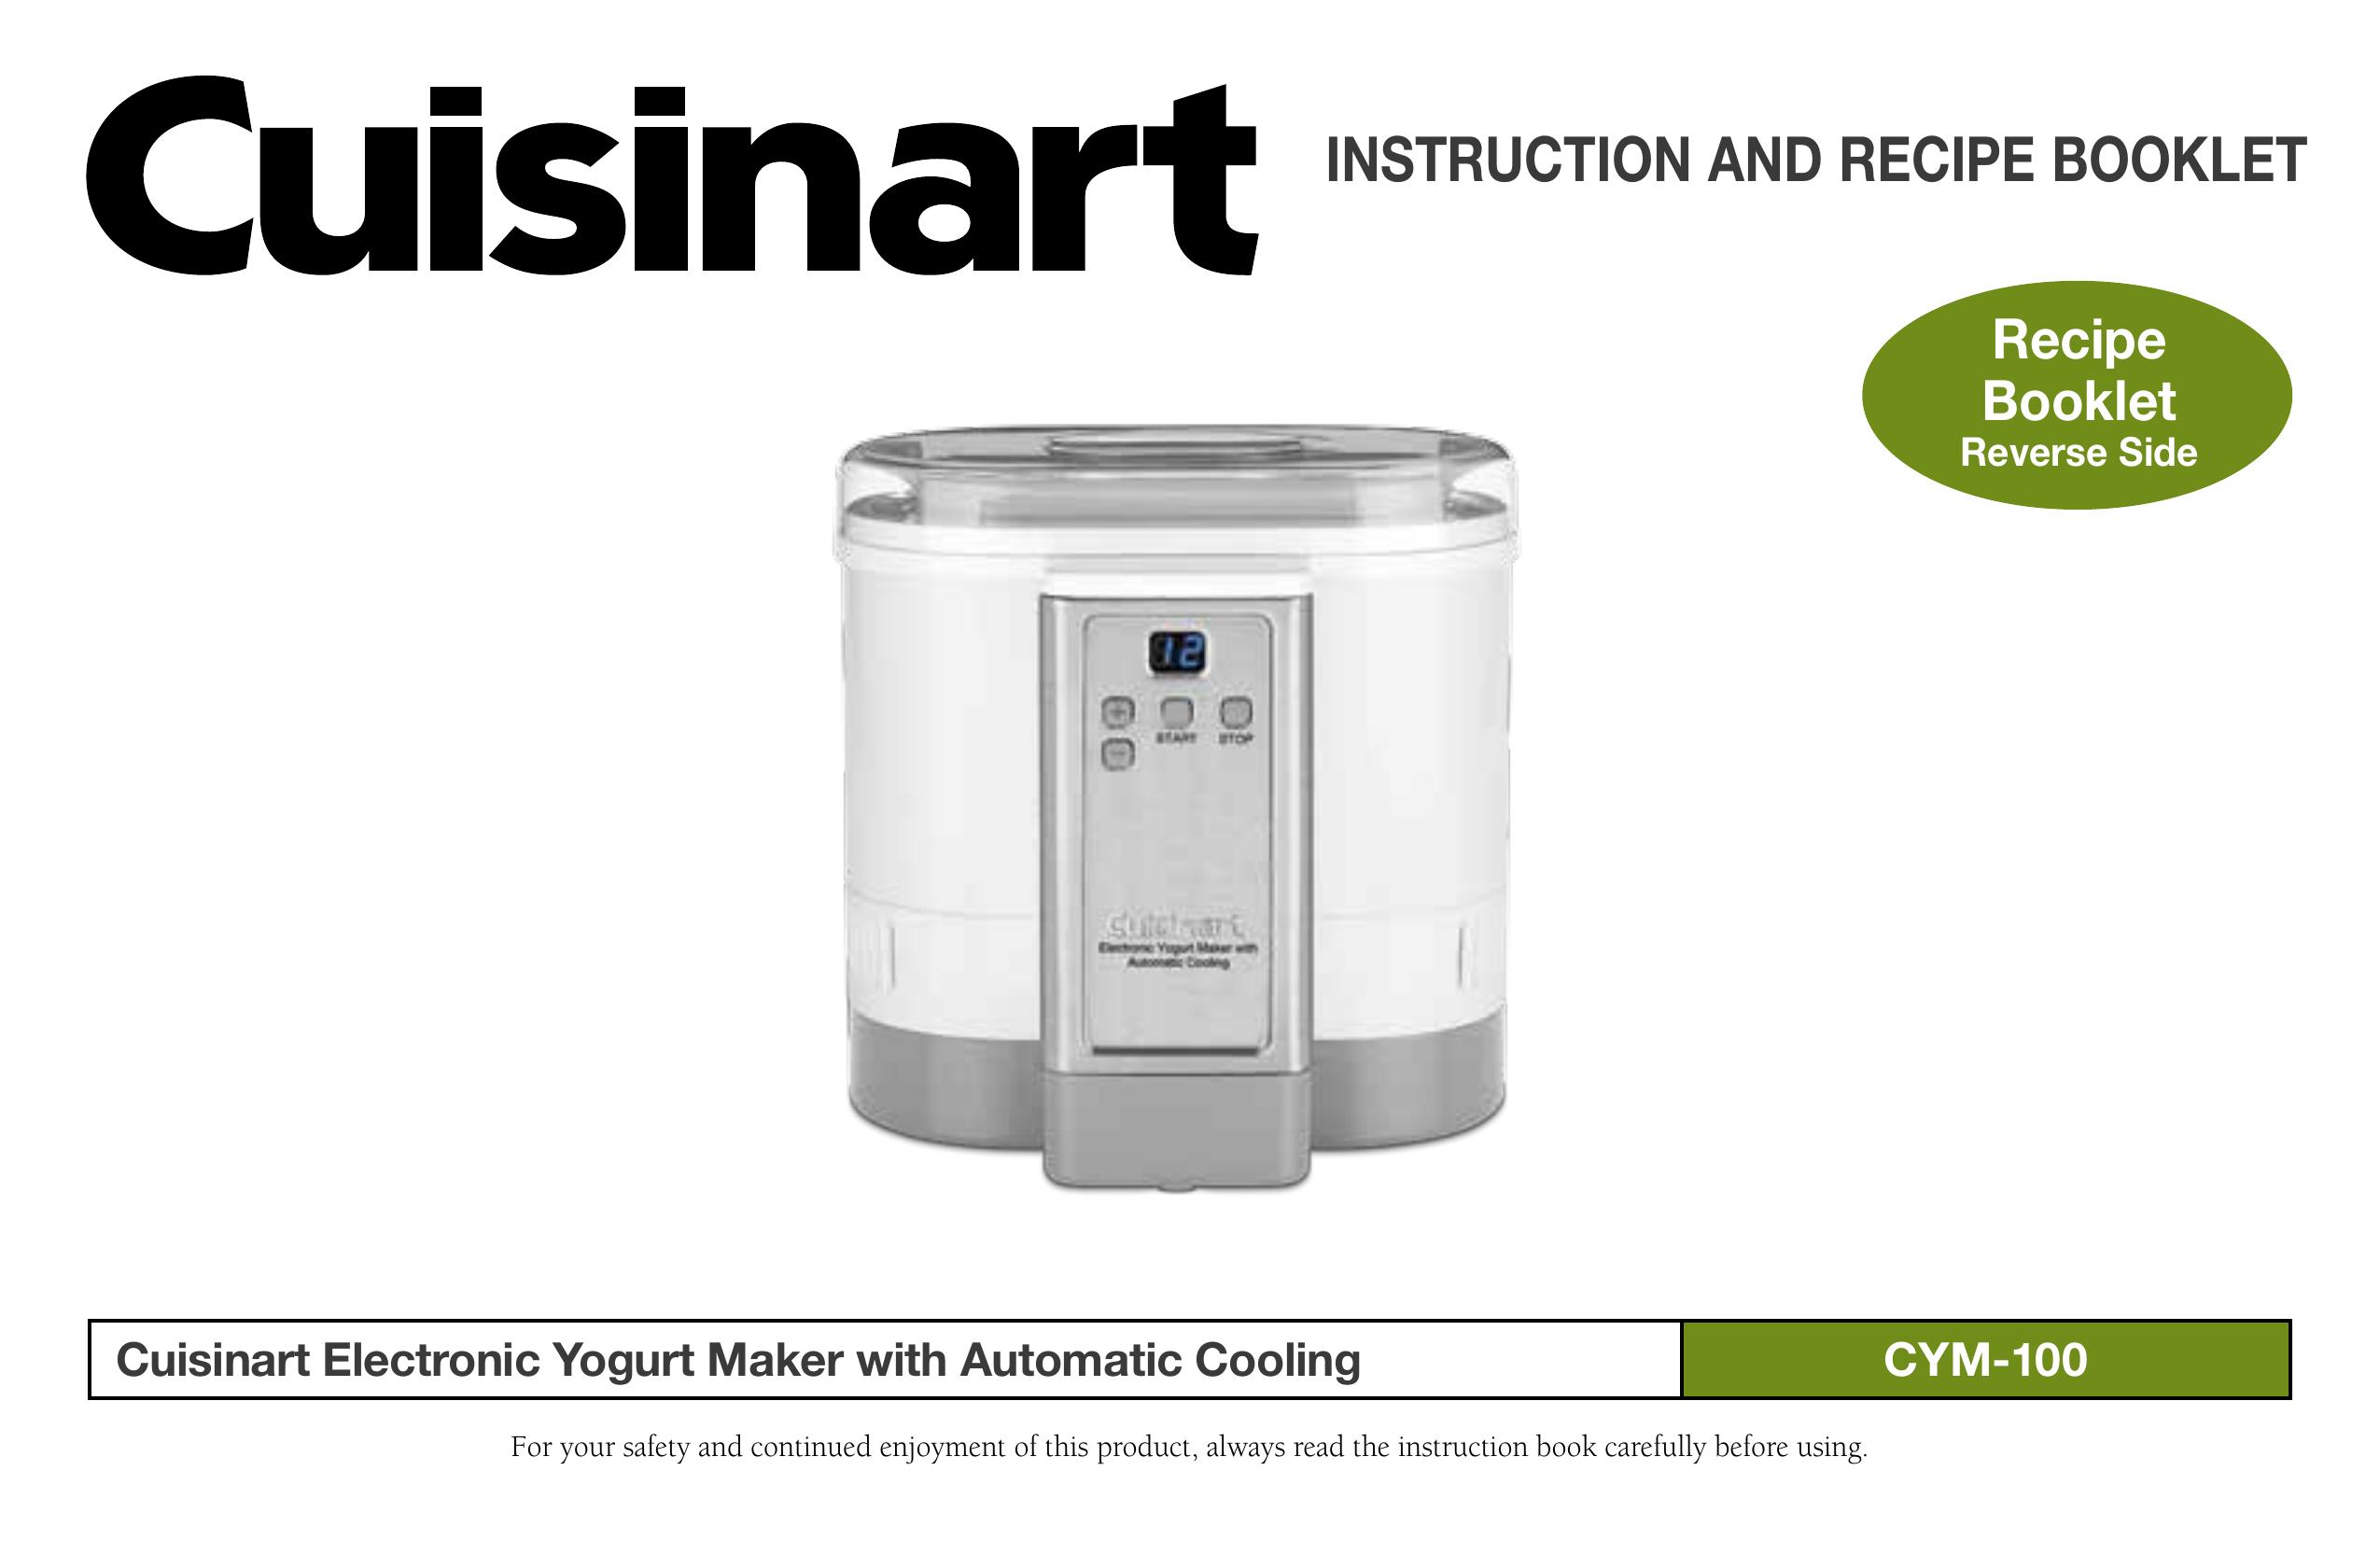 Cuisinart CYM-100 Yogurt Maker User Manual